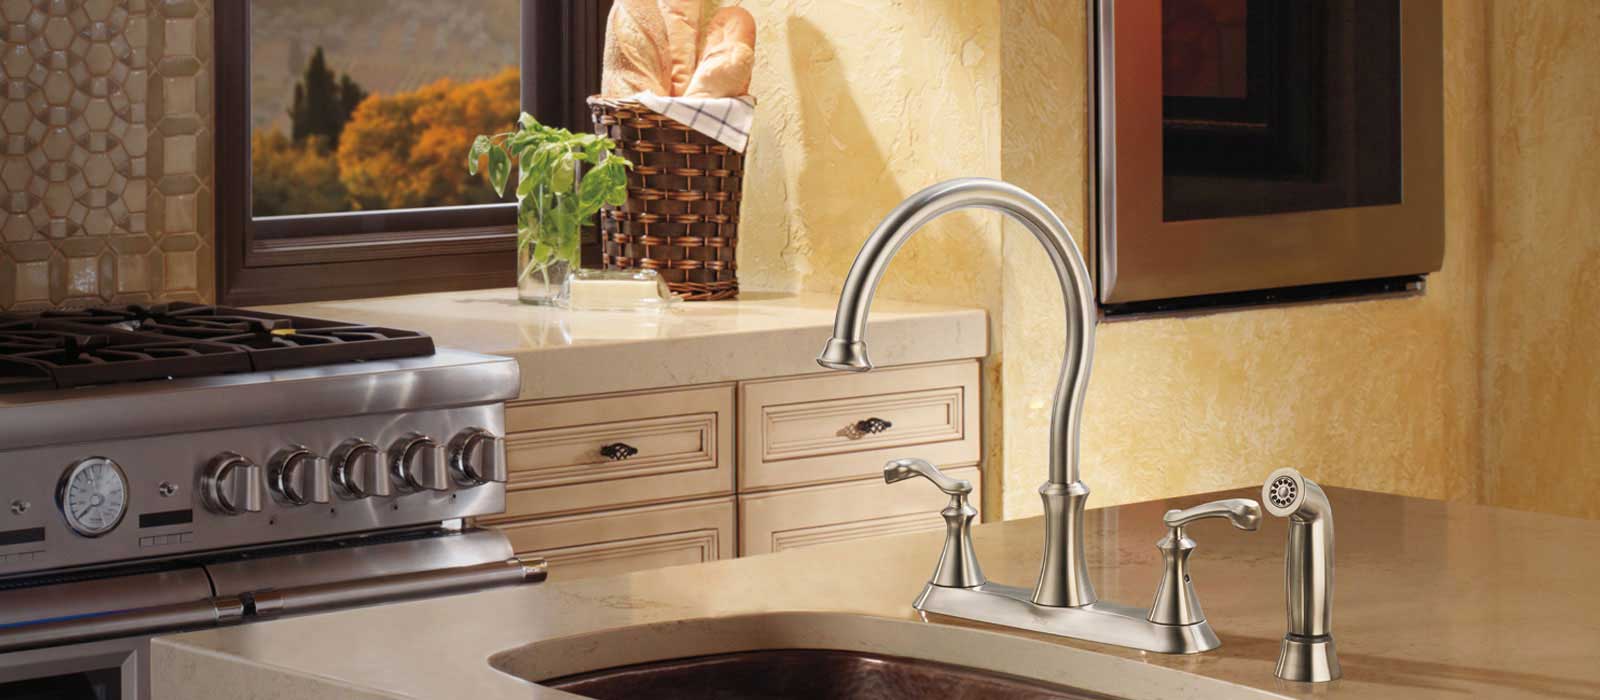 vessona kitchen sink faucets low flow